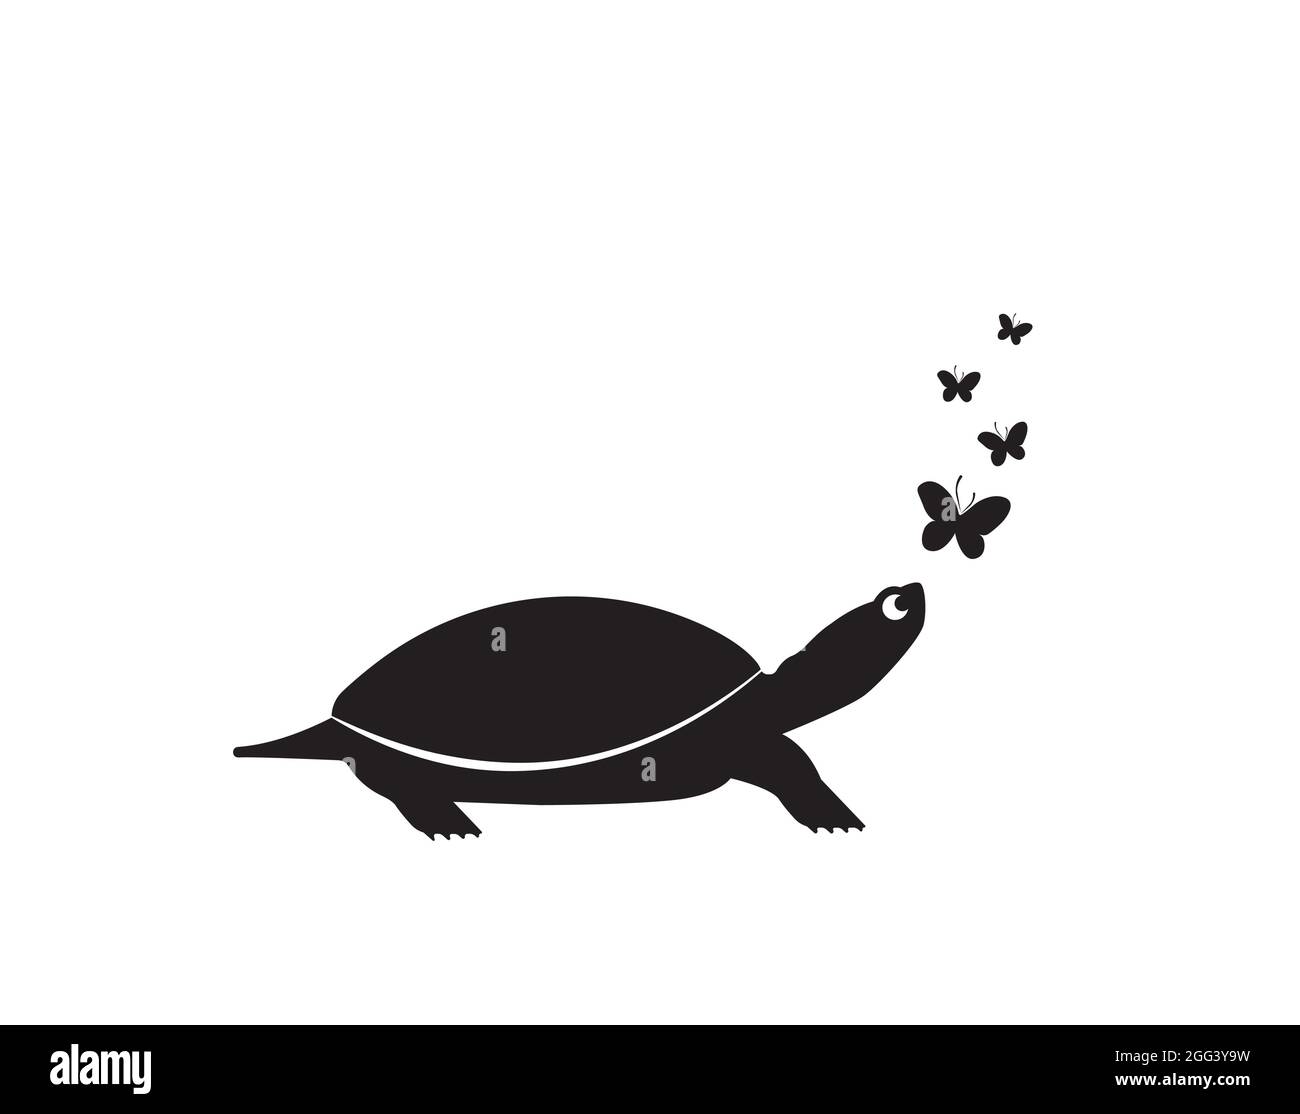 Turtle silhouette and butterflies illustration, vector. Turtle cartoon illustration isolated on white background. Childish minimalist art design. Wall Stock Vector